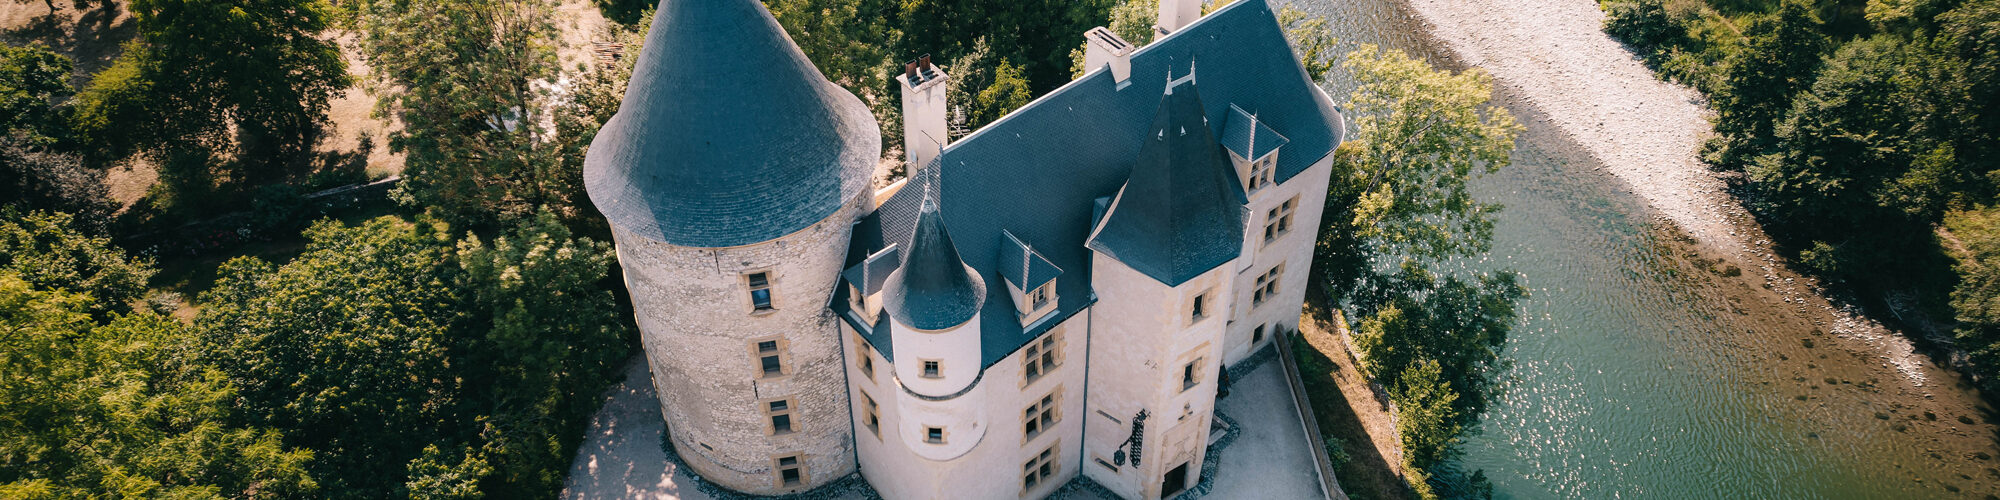 Chateau de saint Martory french wedding chateau